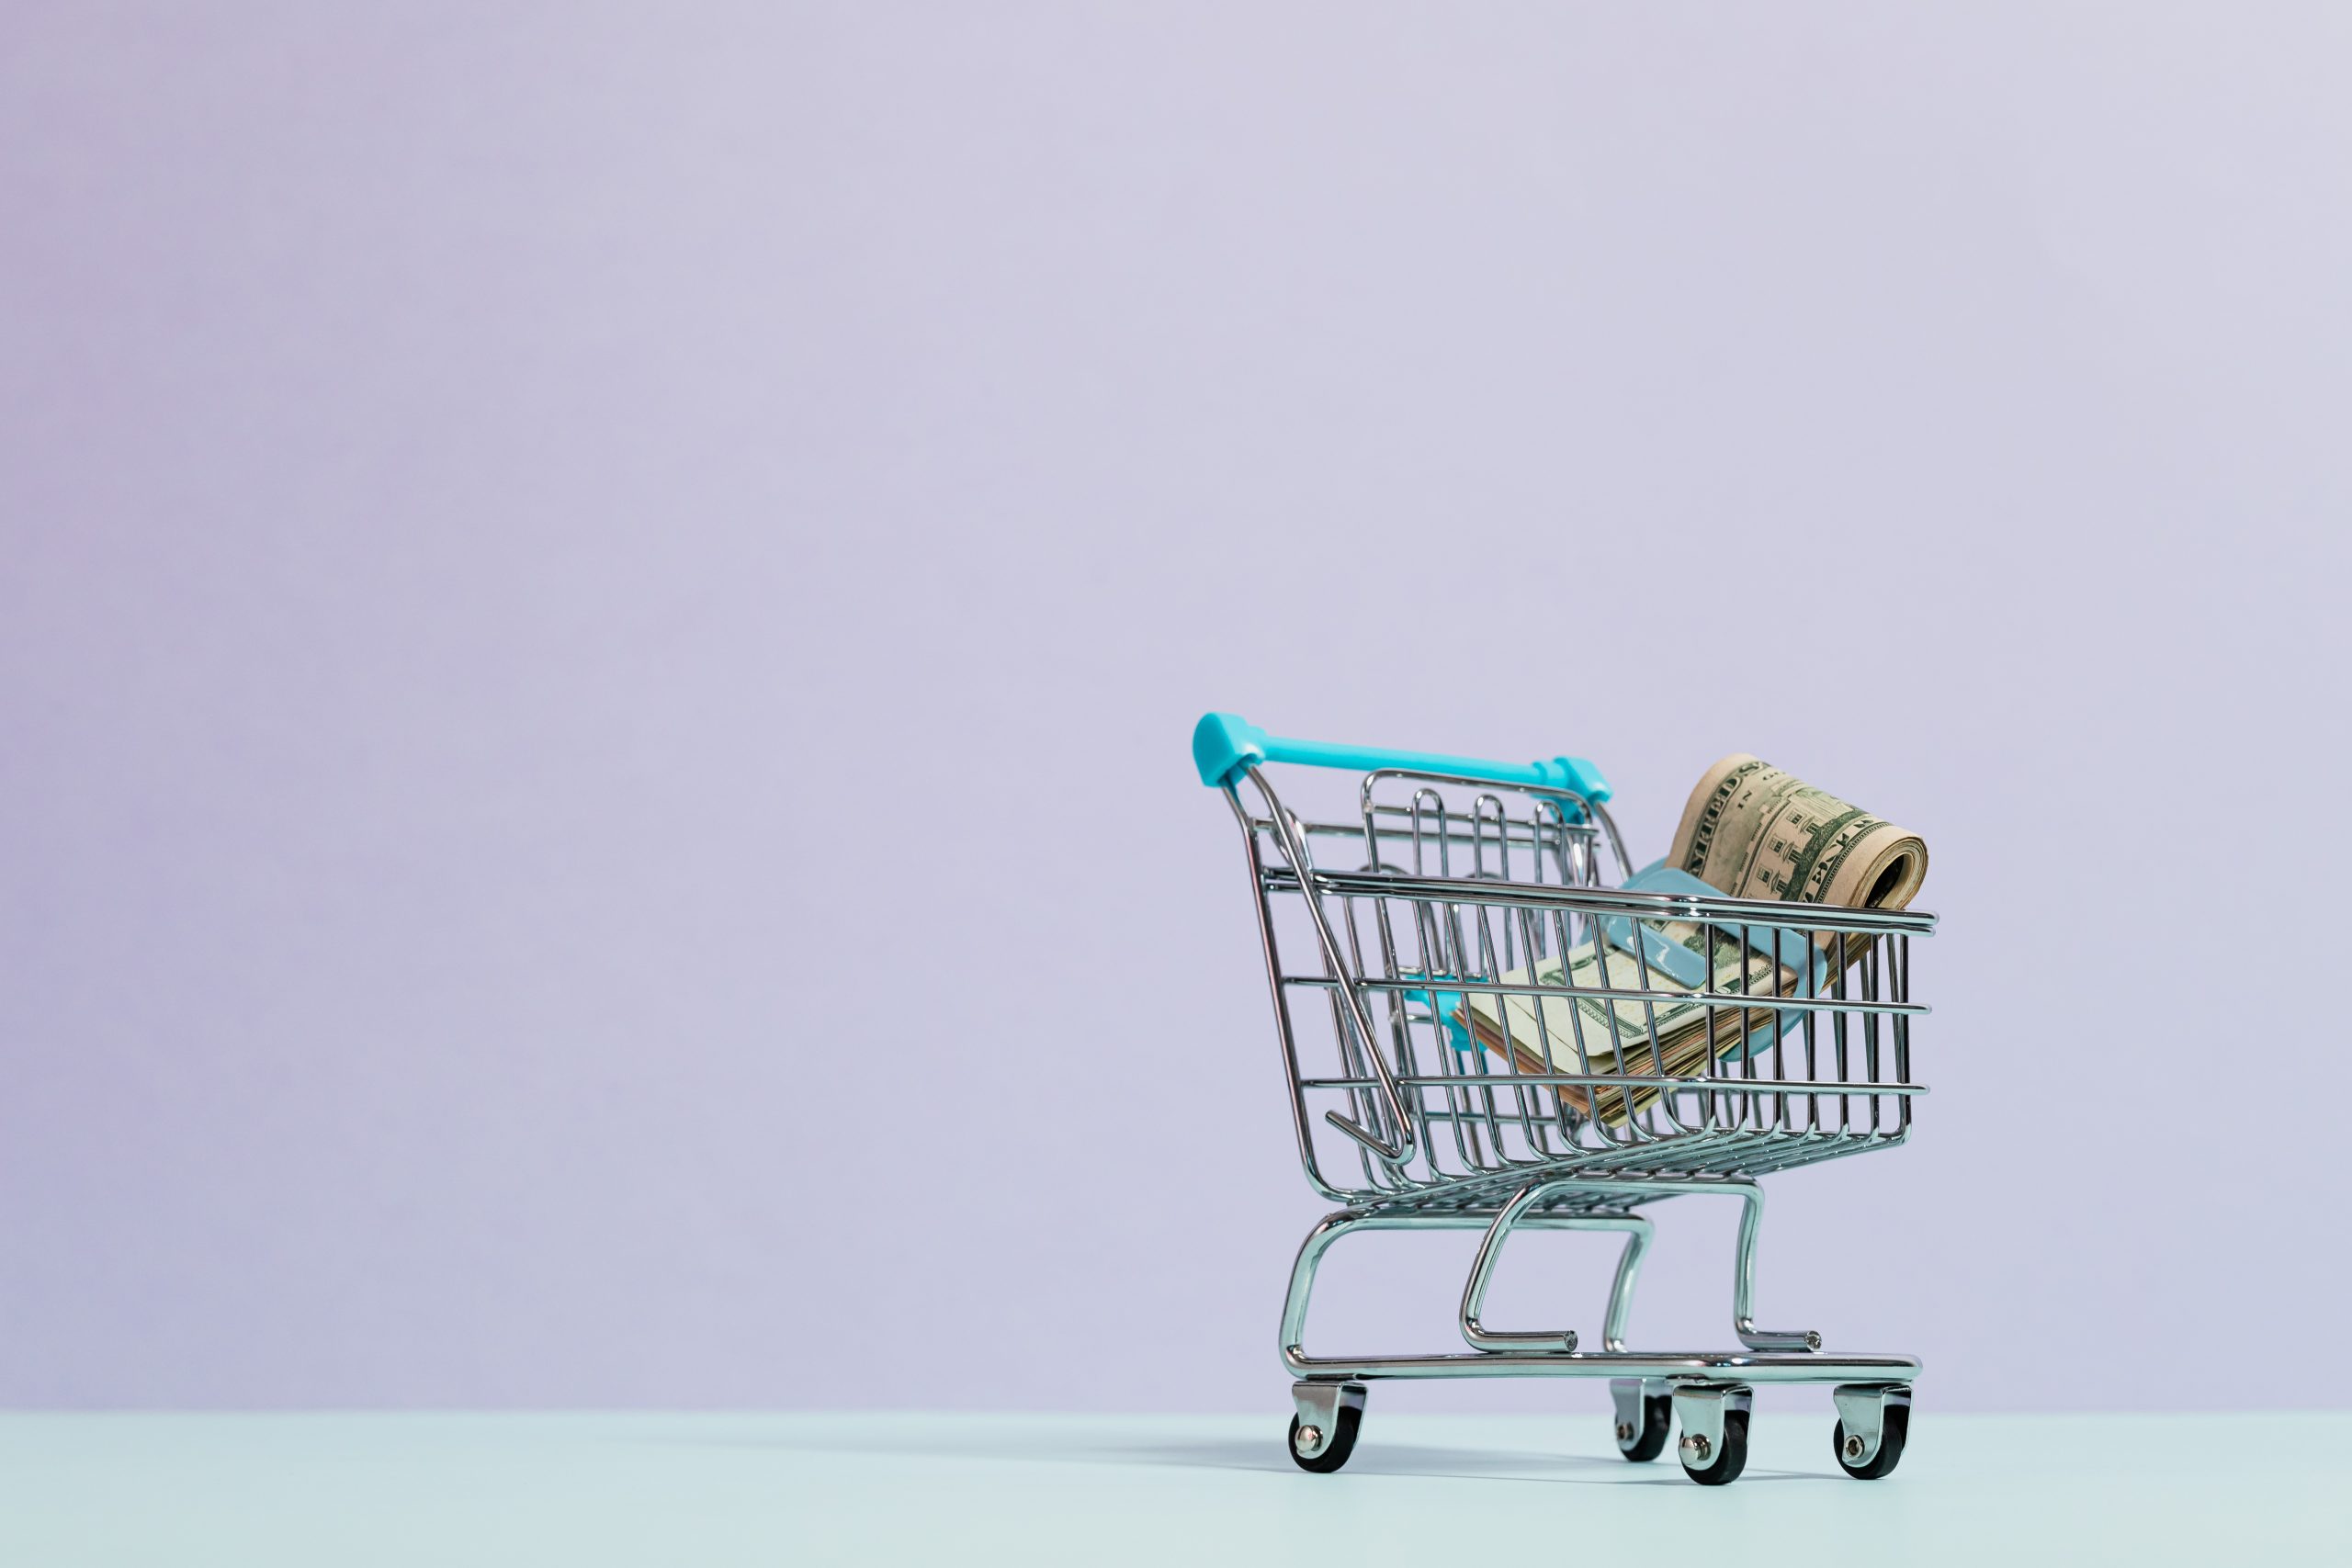 Cash inside a tiny shopping cart